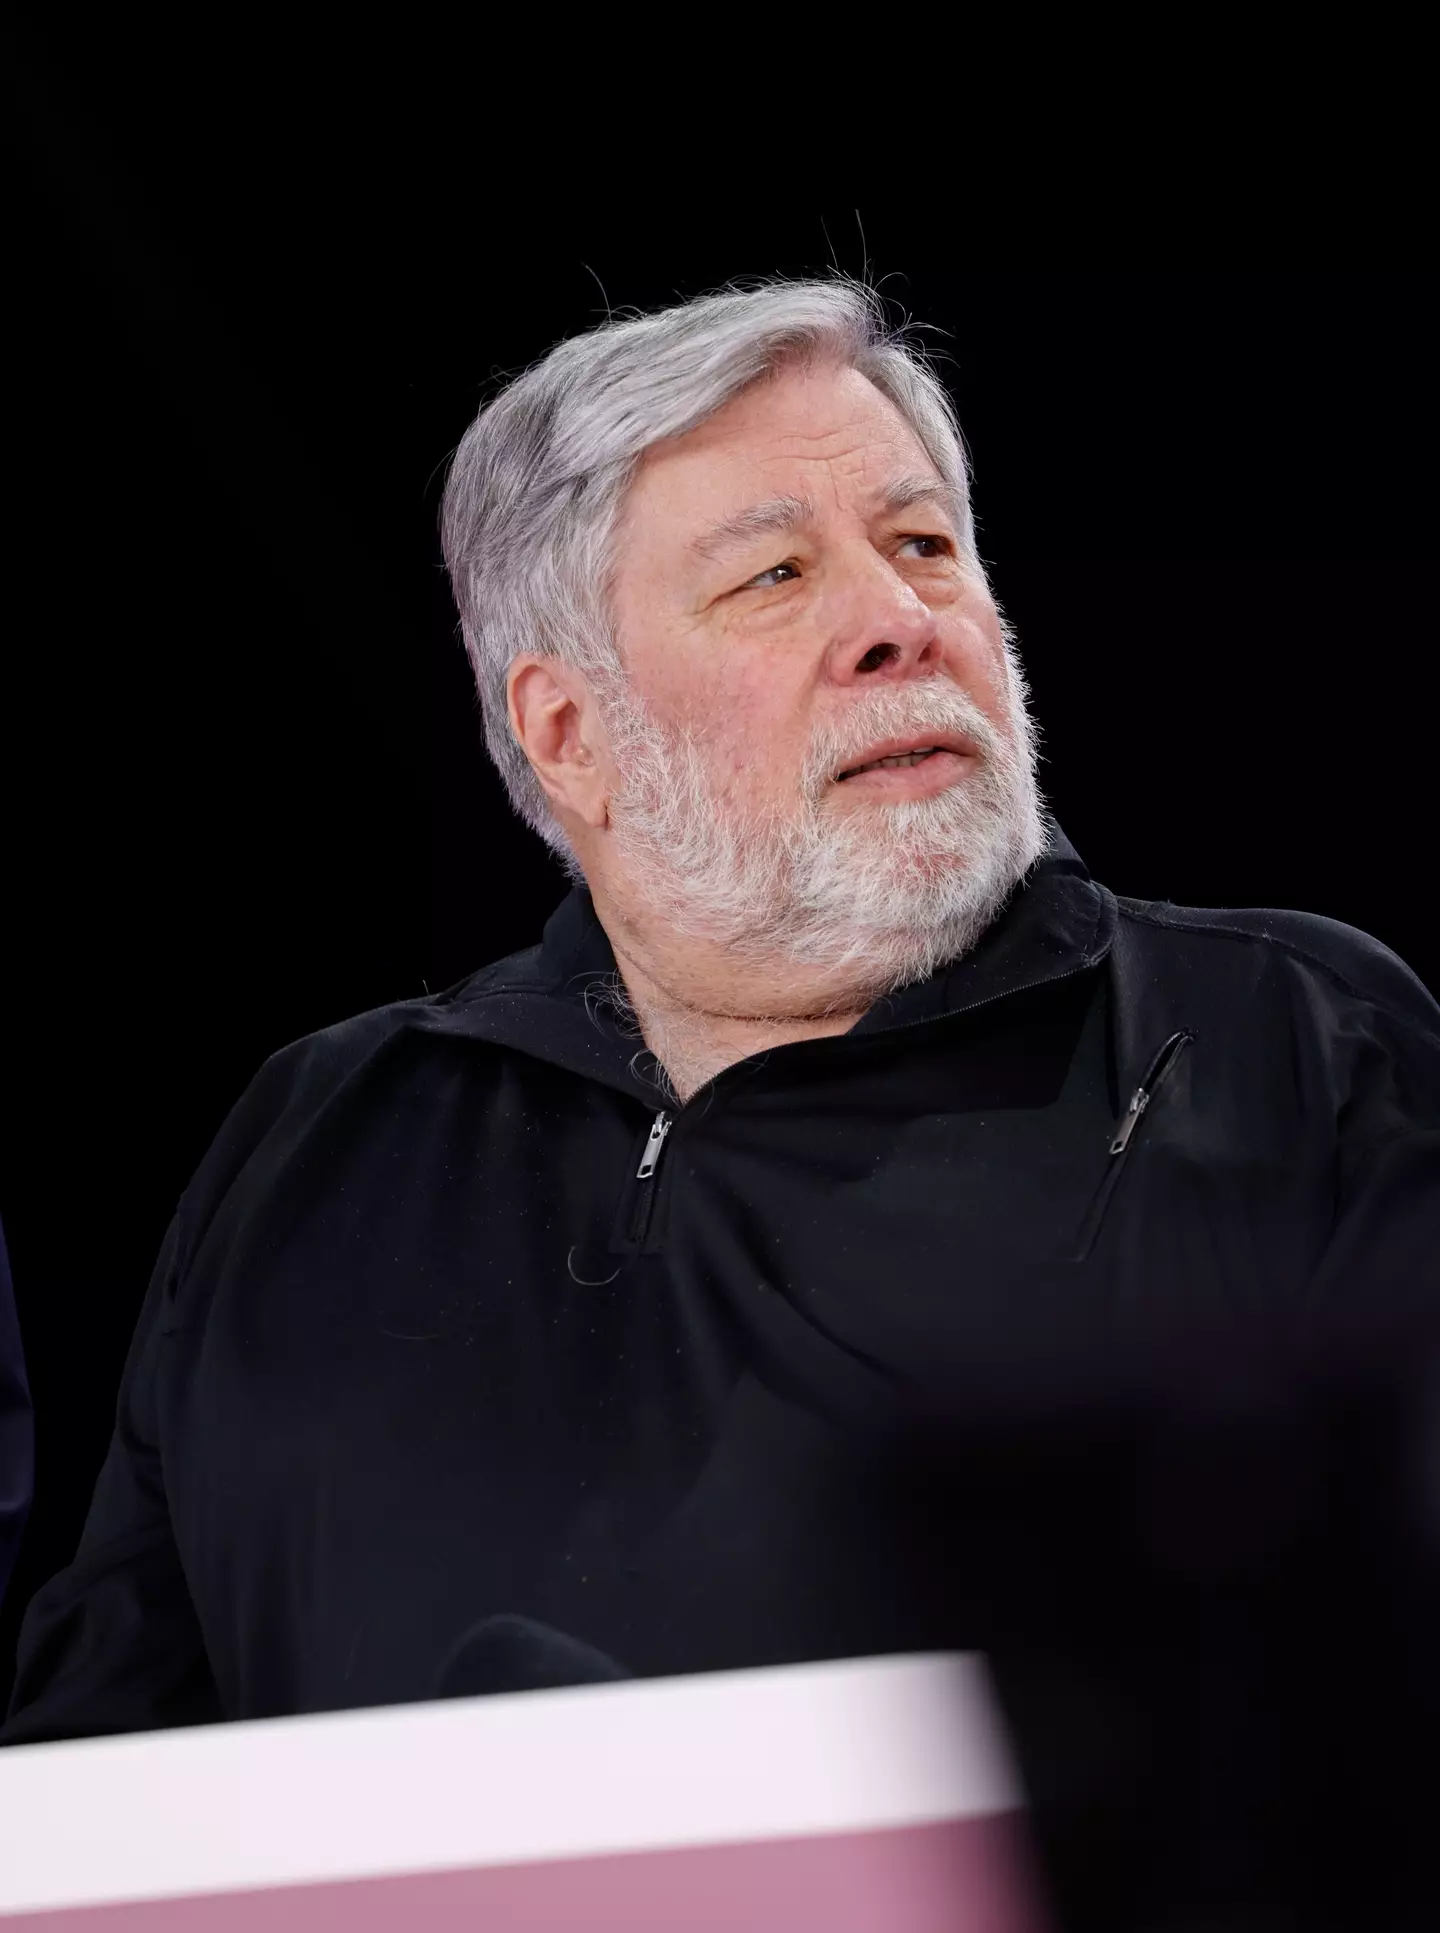 Steve Wozniak tells it differently.